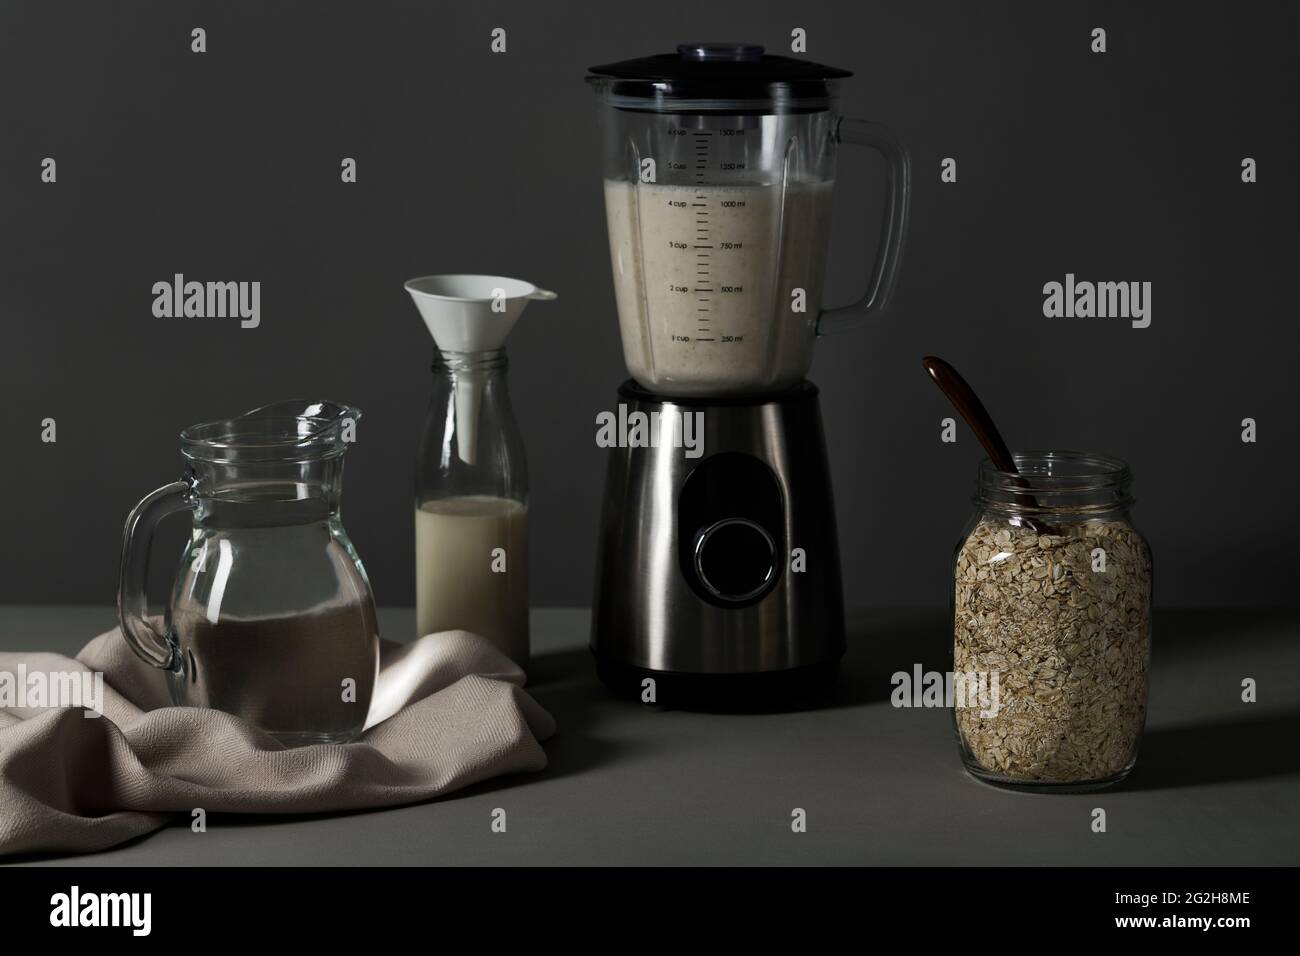 Oat milk, blender, mason jar, jug, milk bottle, funnel, kitchen towel Stock Photo